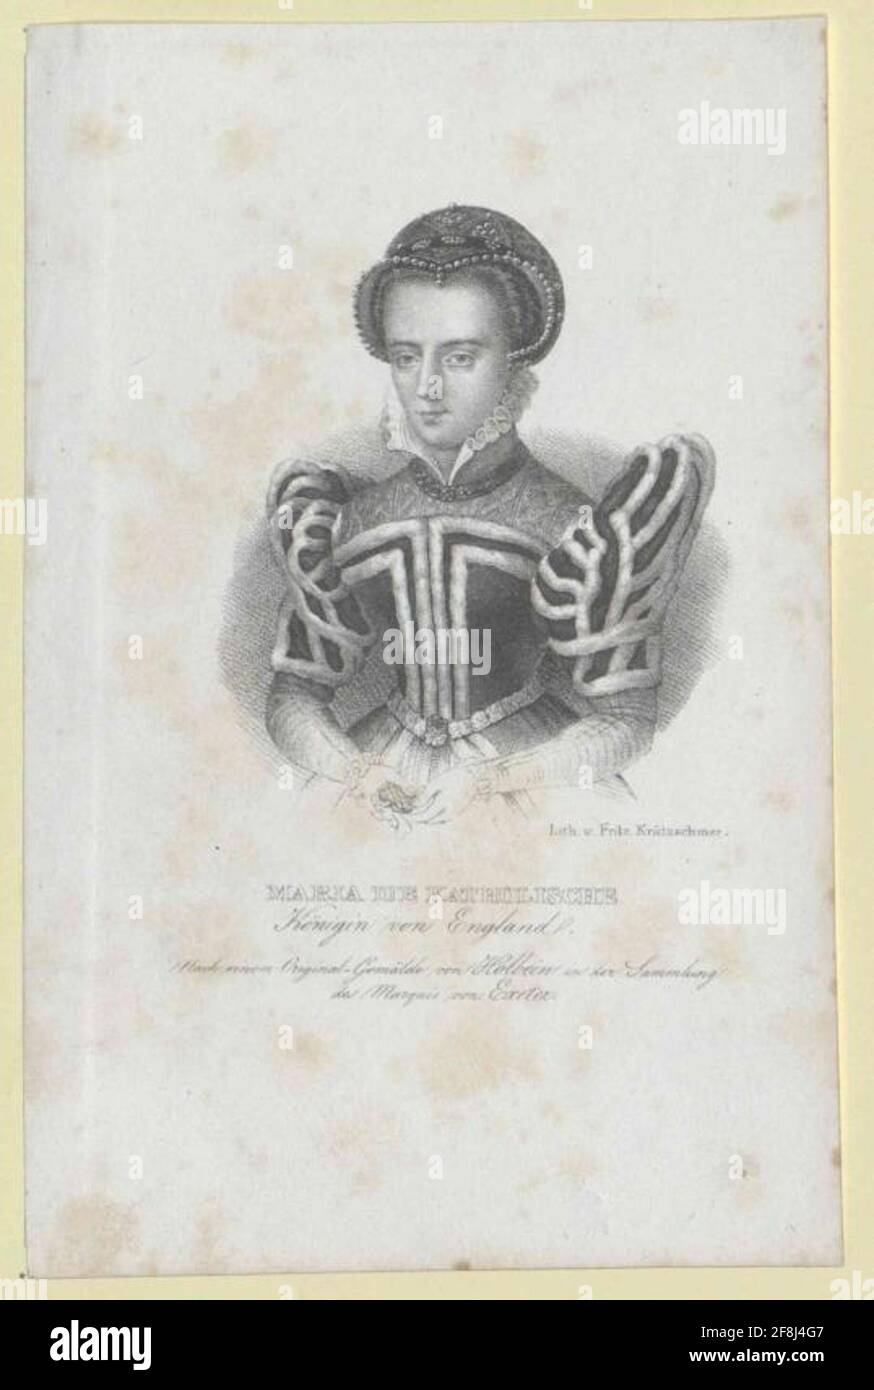 Maria I, Queen of England Publisher: Kneisel, August painter: Holbein, Hans (The Younger) Stecher: Krätzschmer, Franz Friedrich Adolph Verlagsort: Leipzig Stock Photo